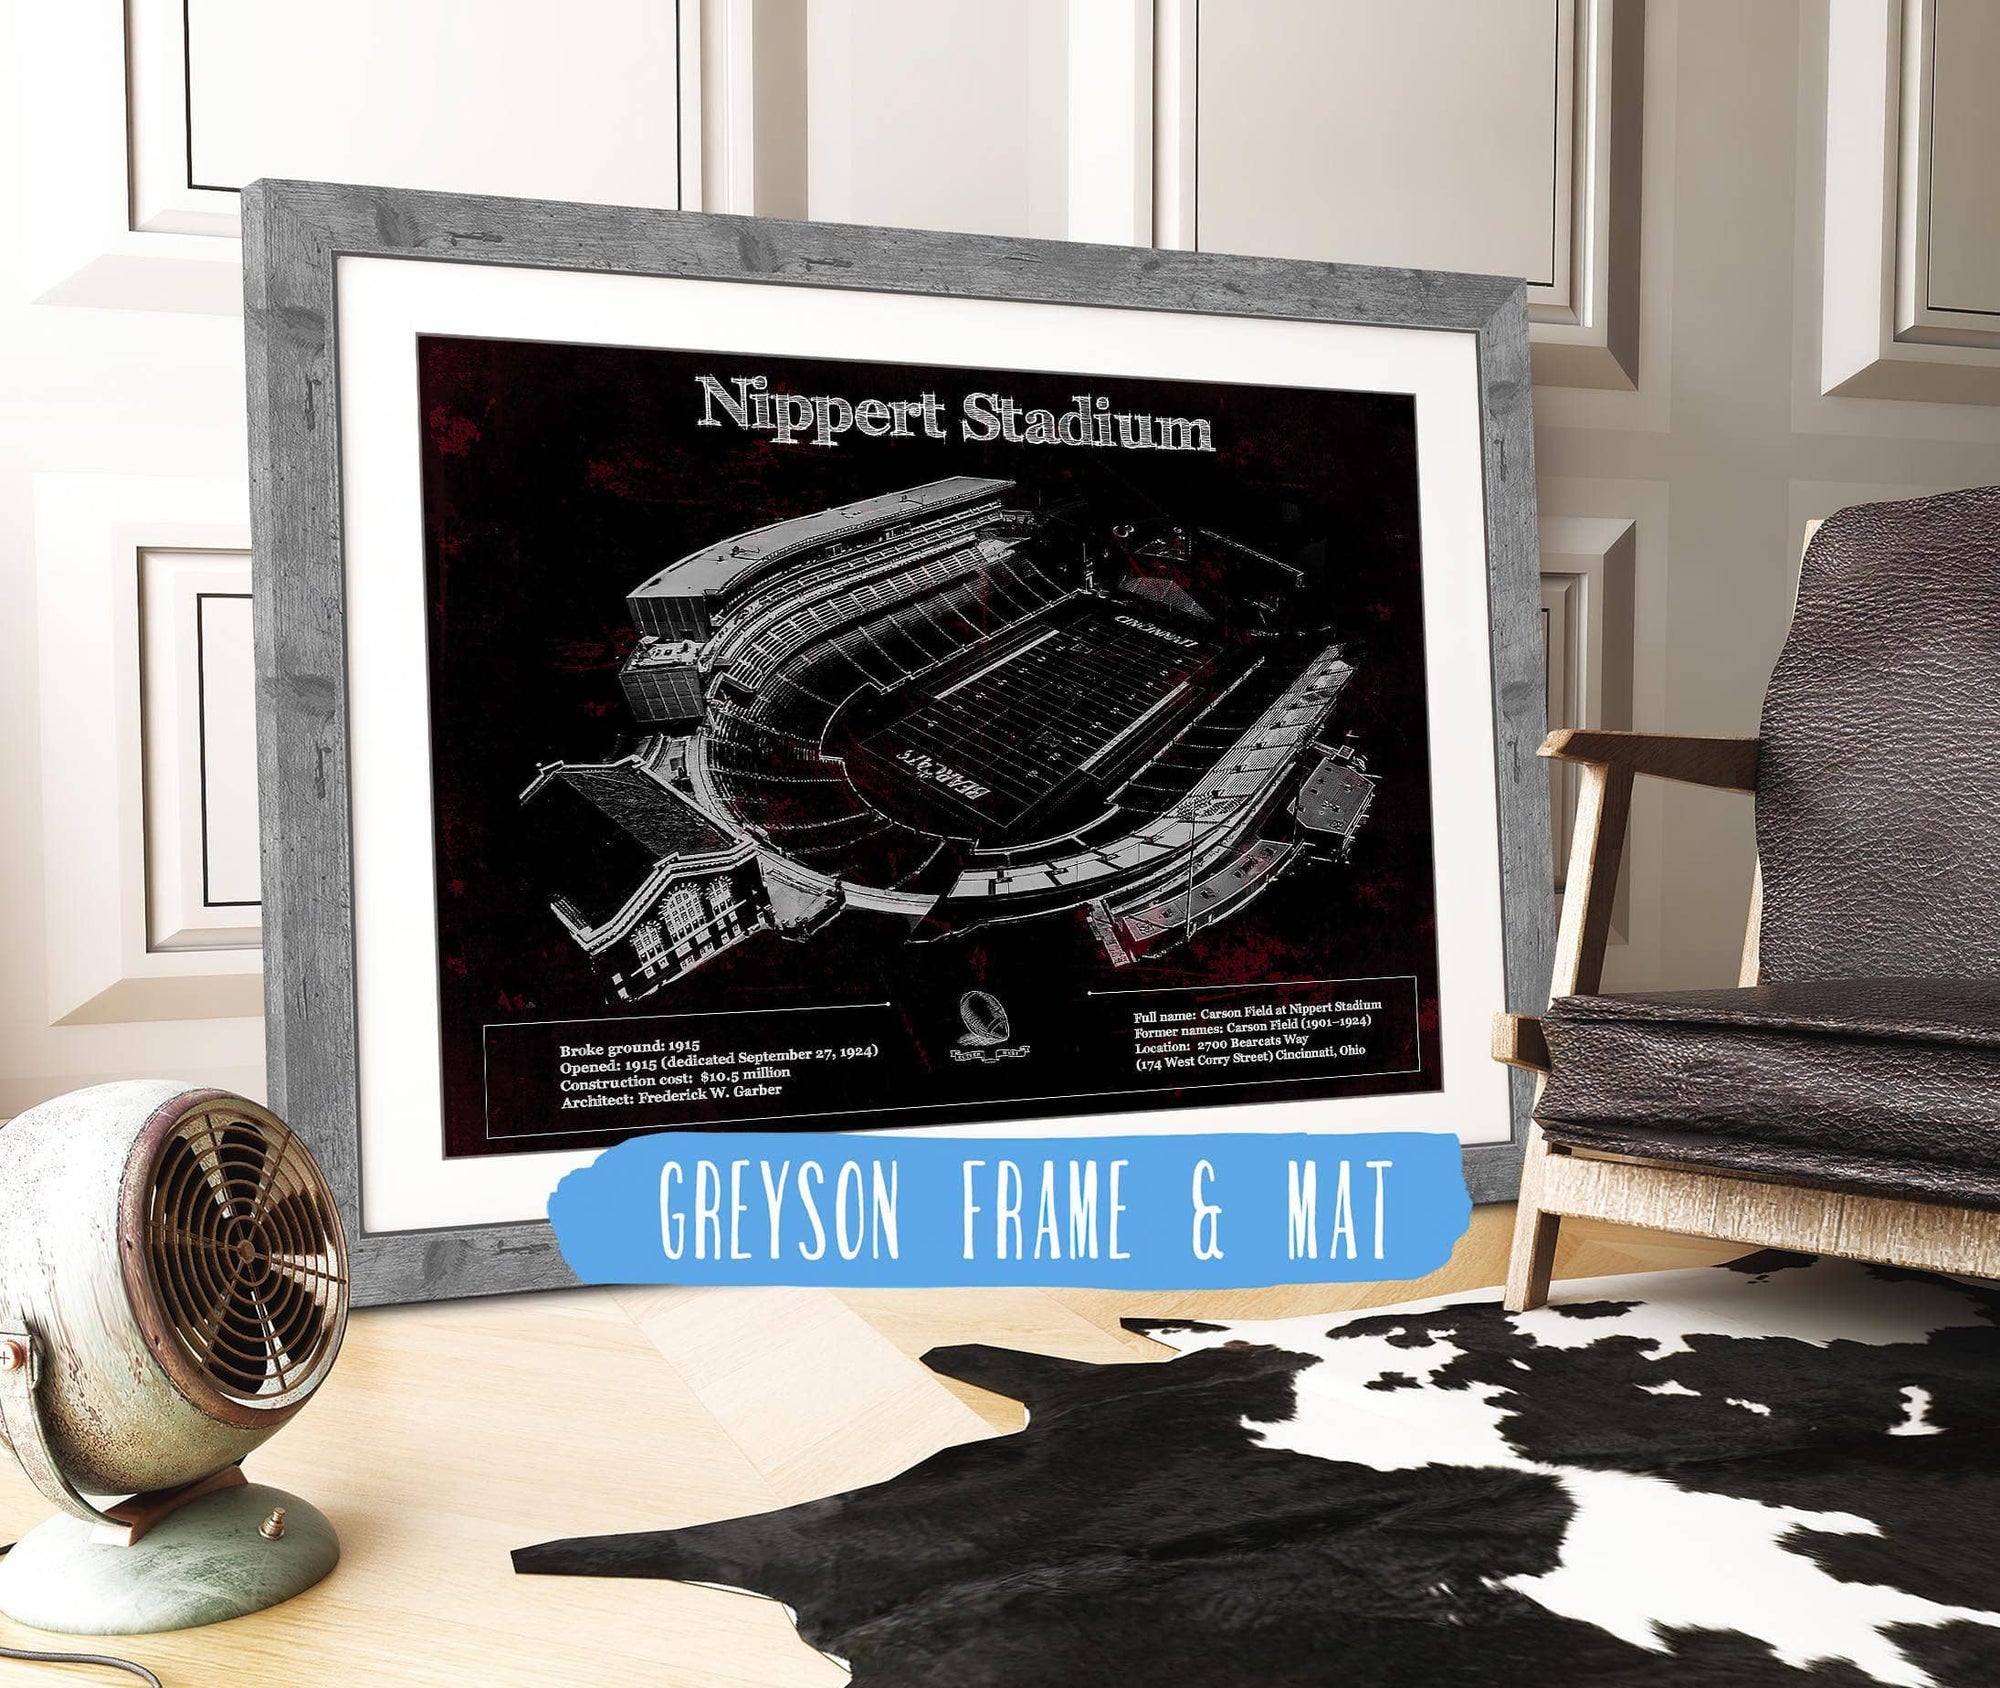 Cutler West Pro Football Collection 14" x 11" / Greyson Frame & Mat Cincinnati Bearcats - Vintage Nippert Stadium Team Color Art Print 9488864841_53431